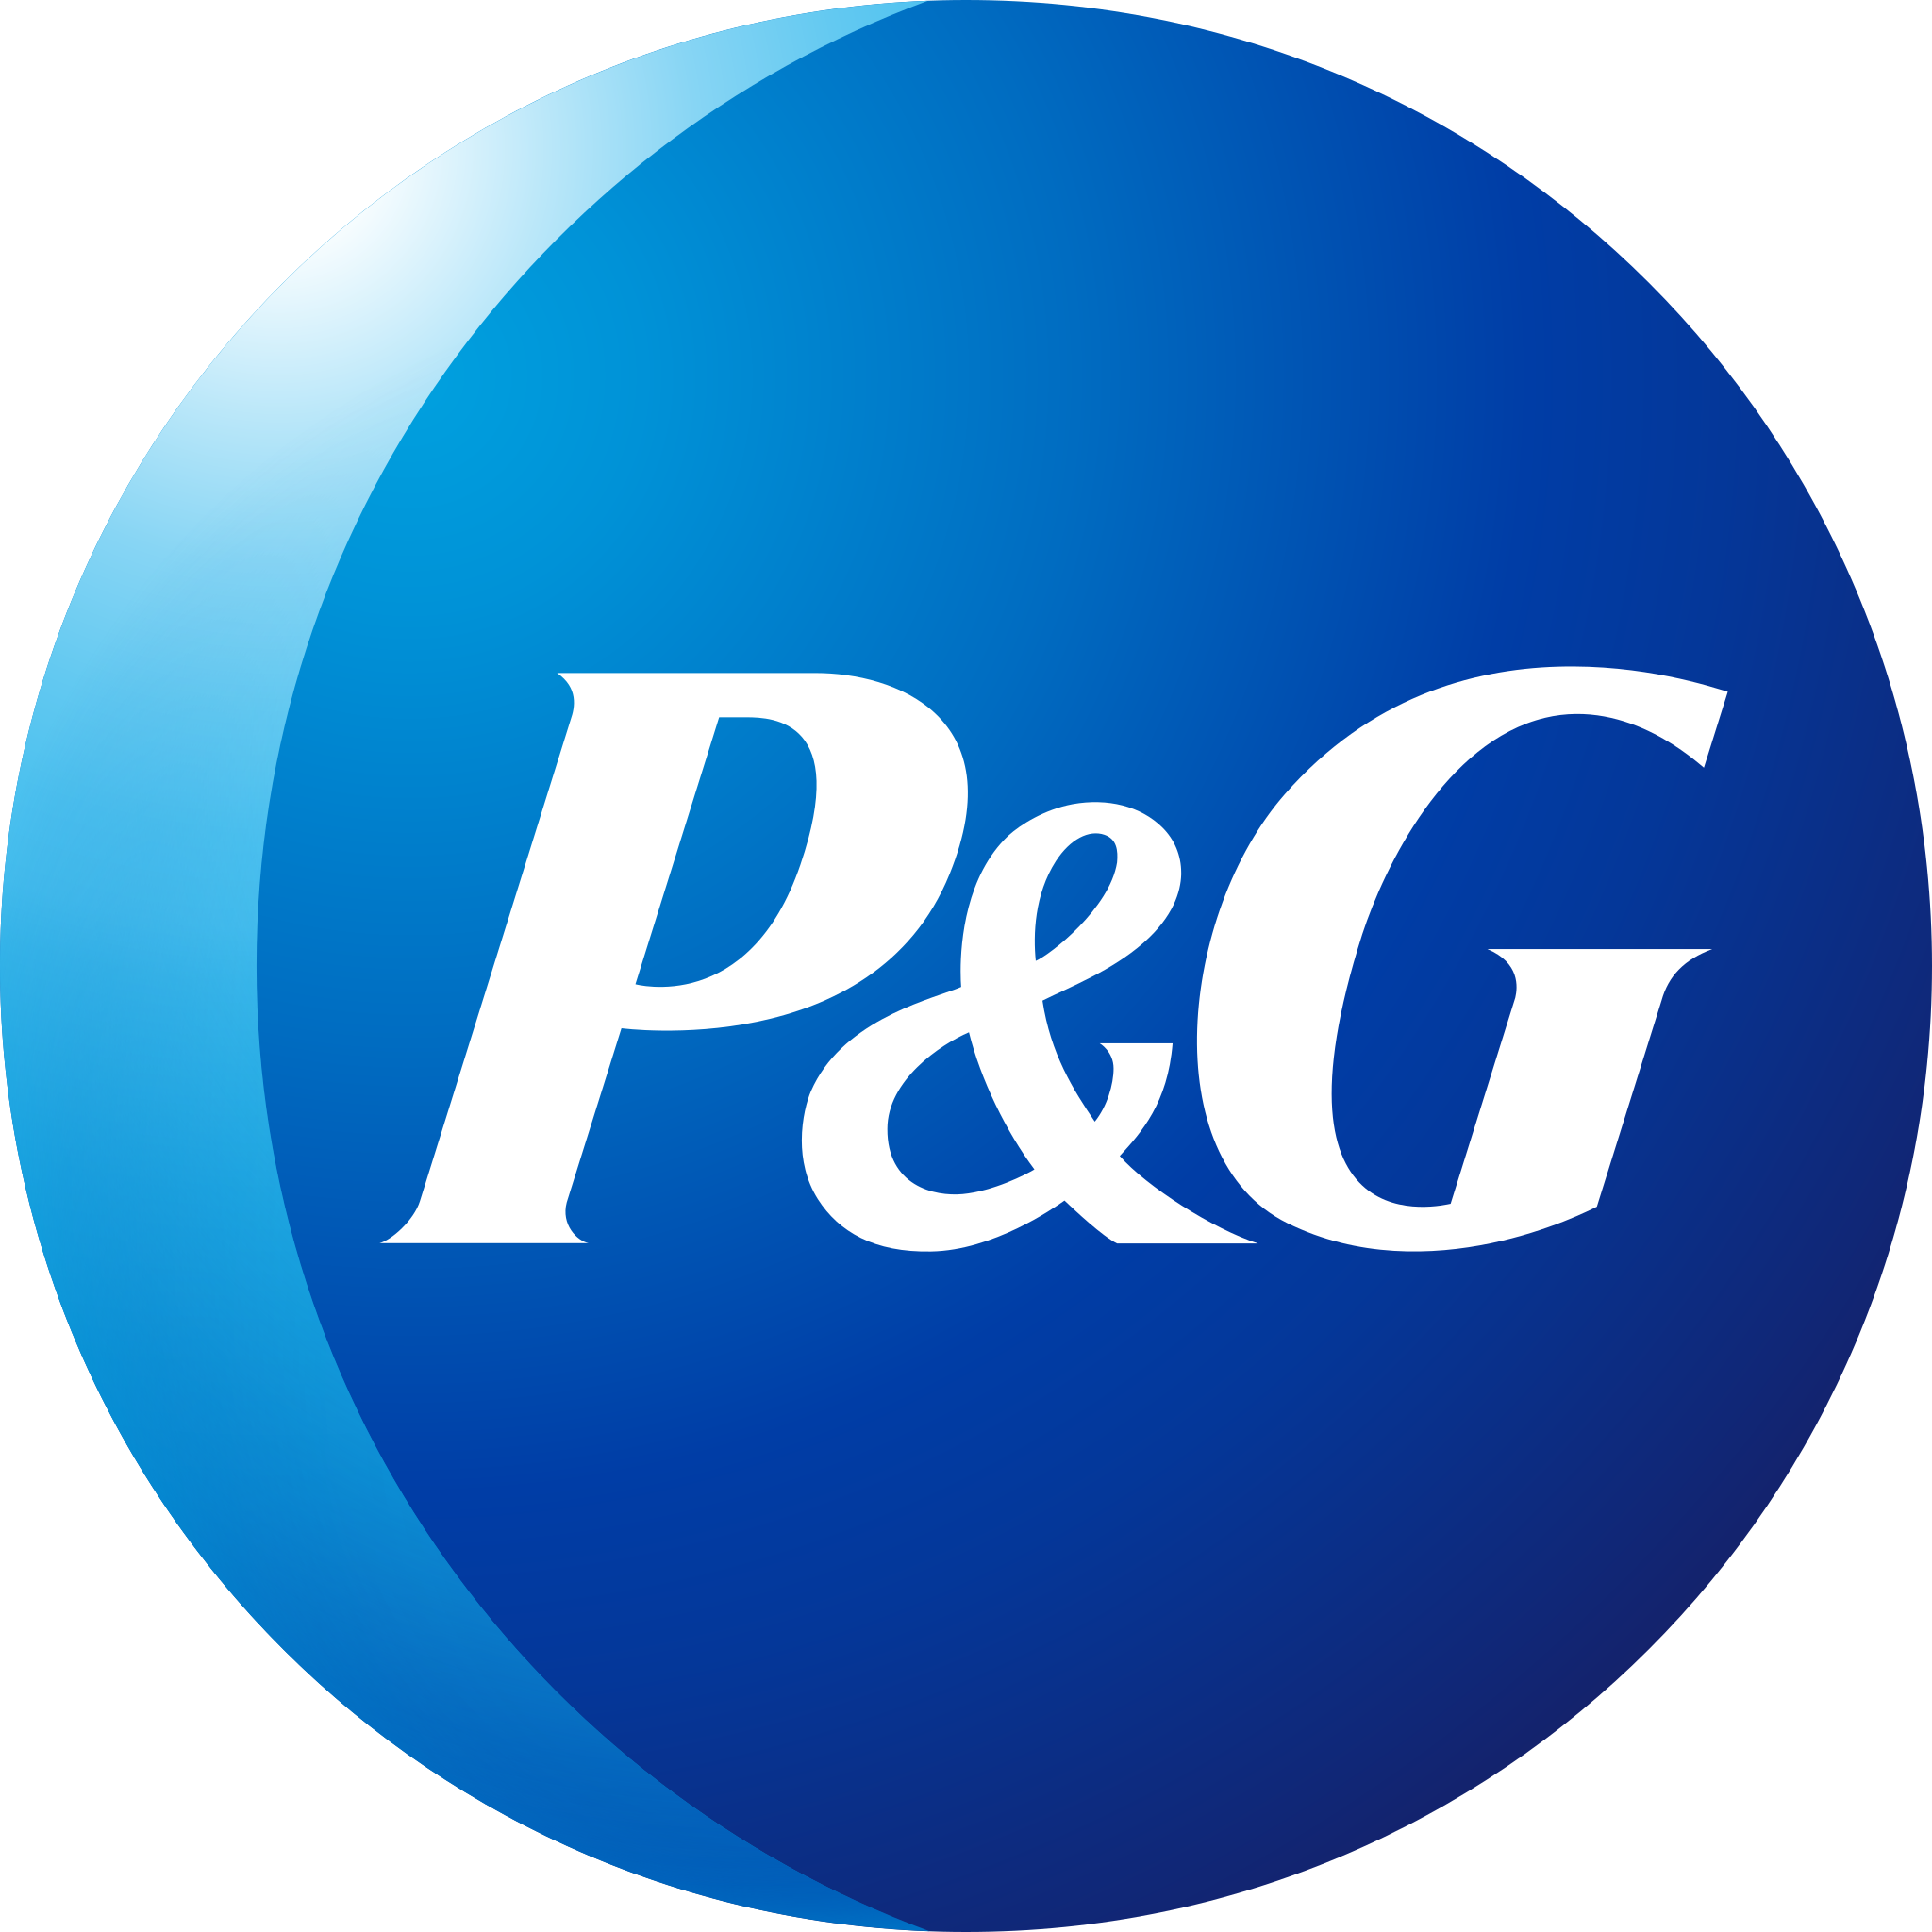 The Procter & Gamble